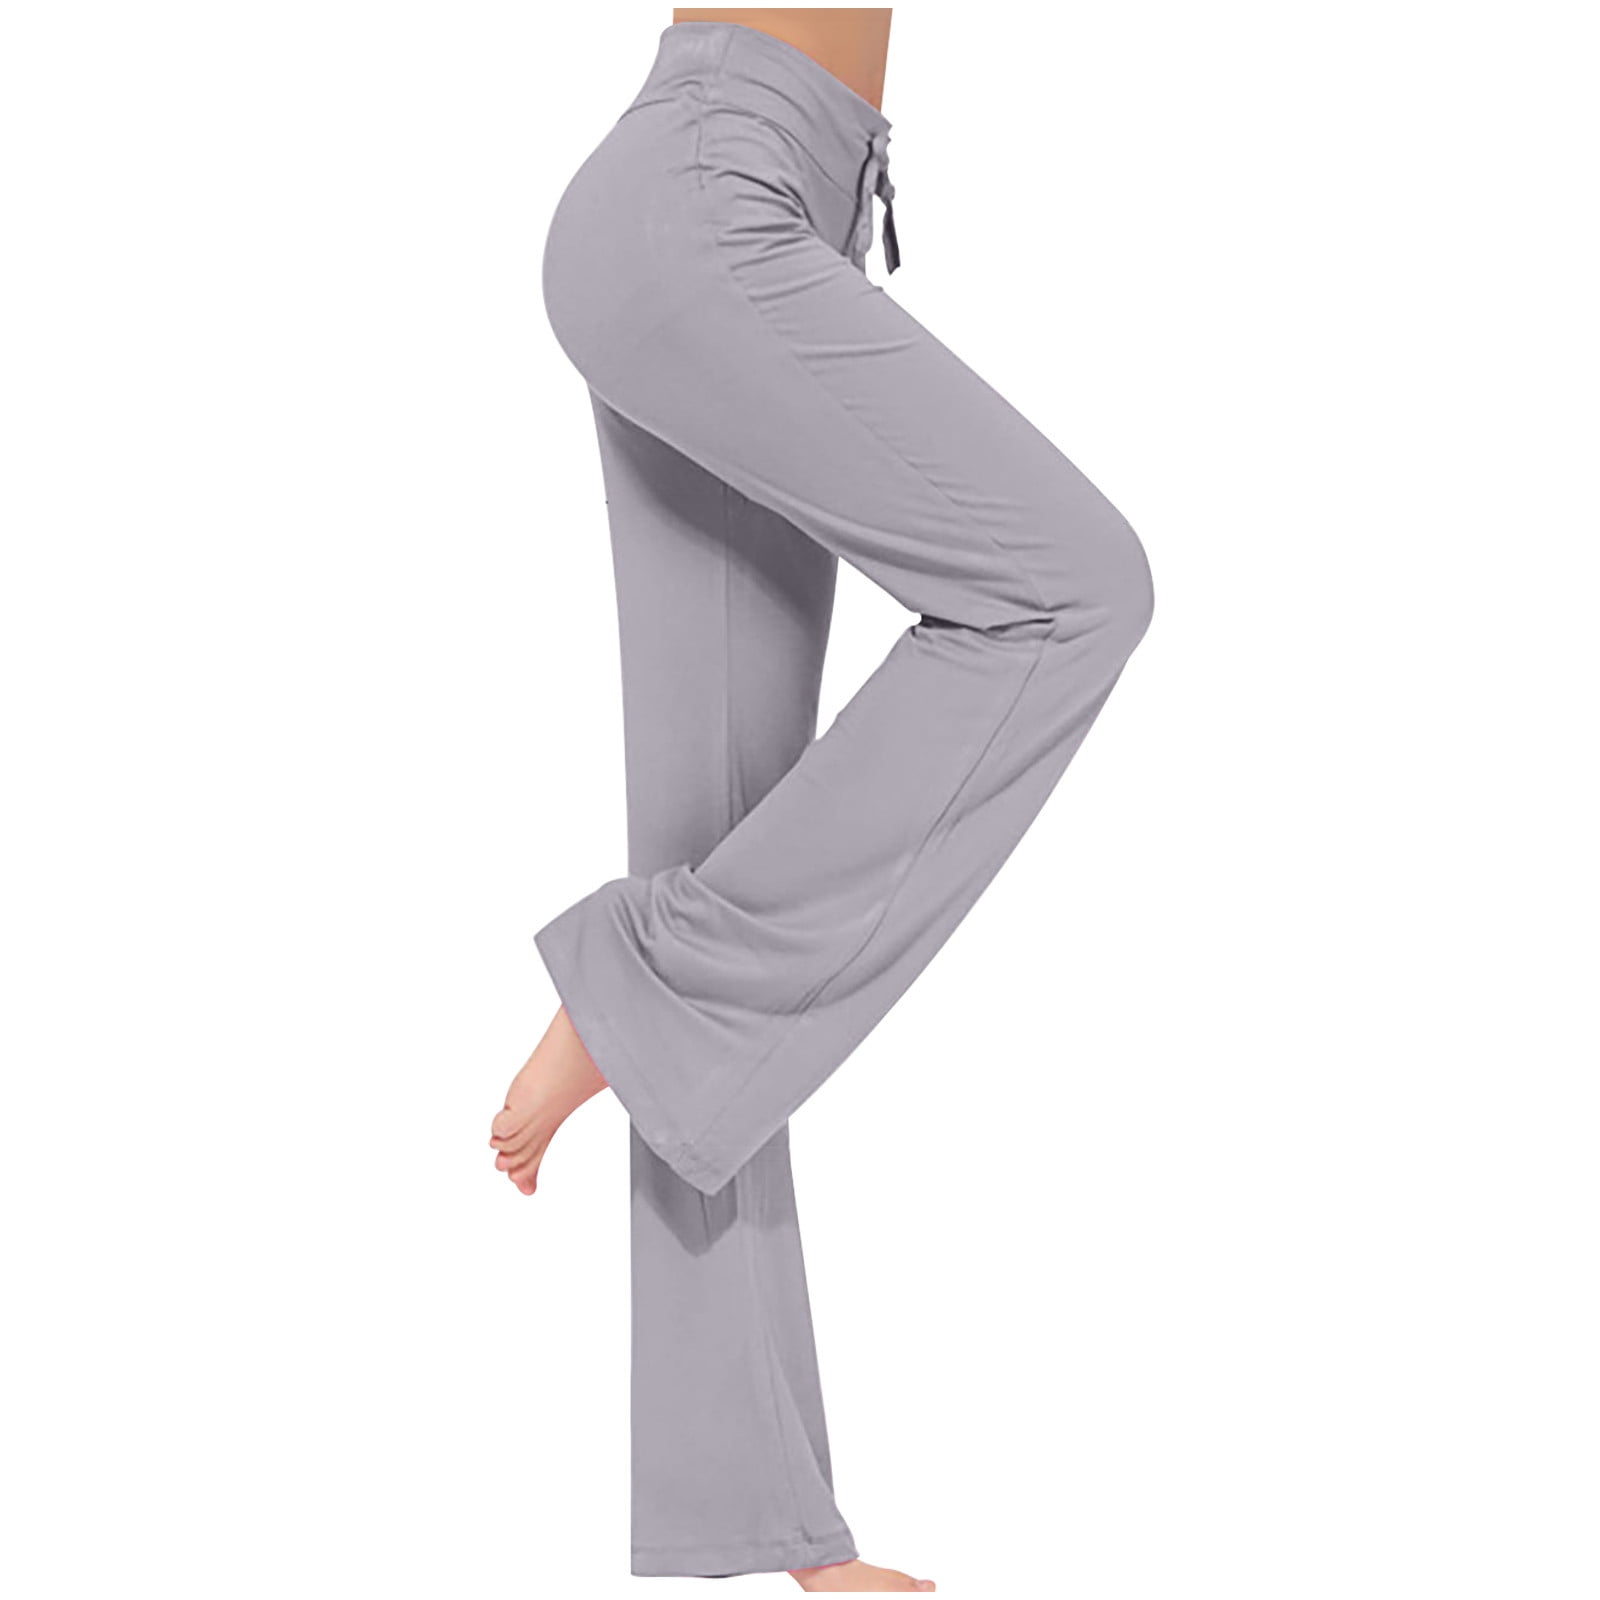 Buy 3 Pack High Waisted Leggings for Women Butt Lift Tummy Control Yoga Pants  Workout Running Pants (02 Black/Dark Grey/Navy Blue, S/M), 02  Black/Navy/Grey at